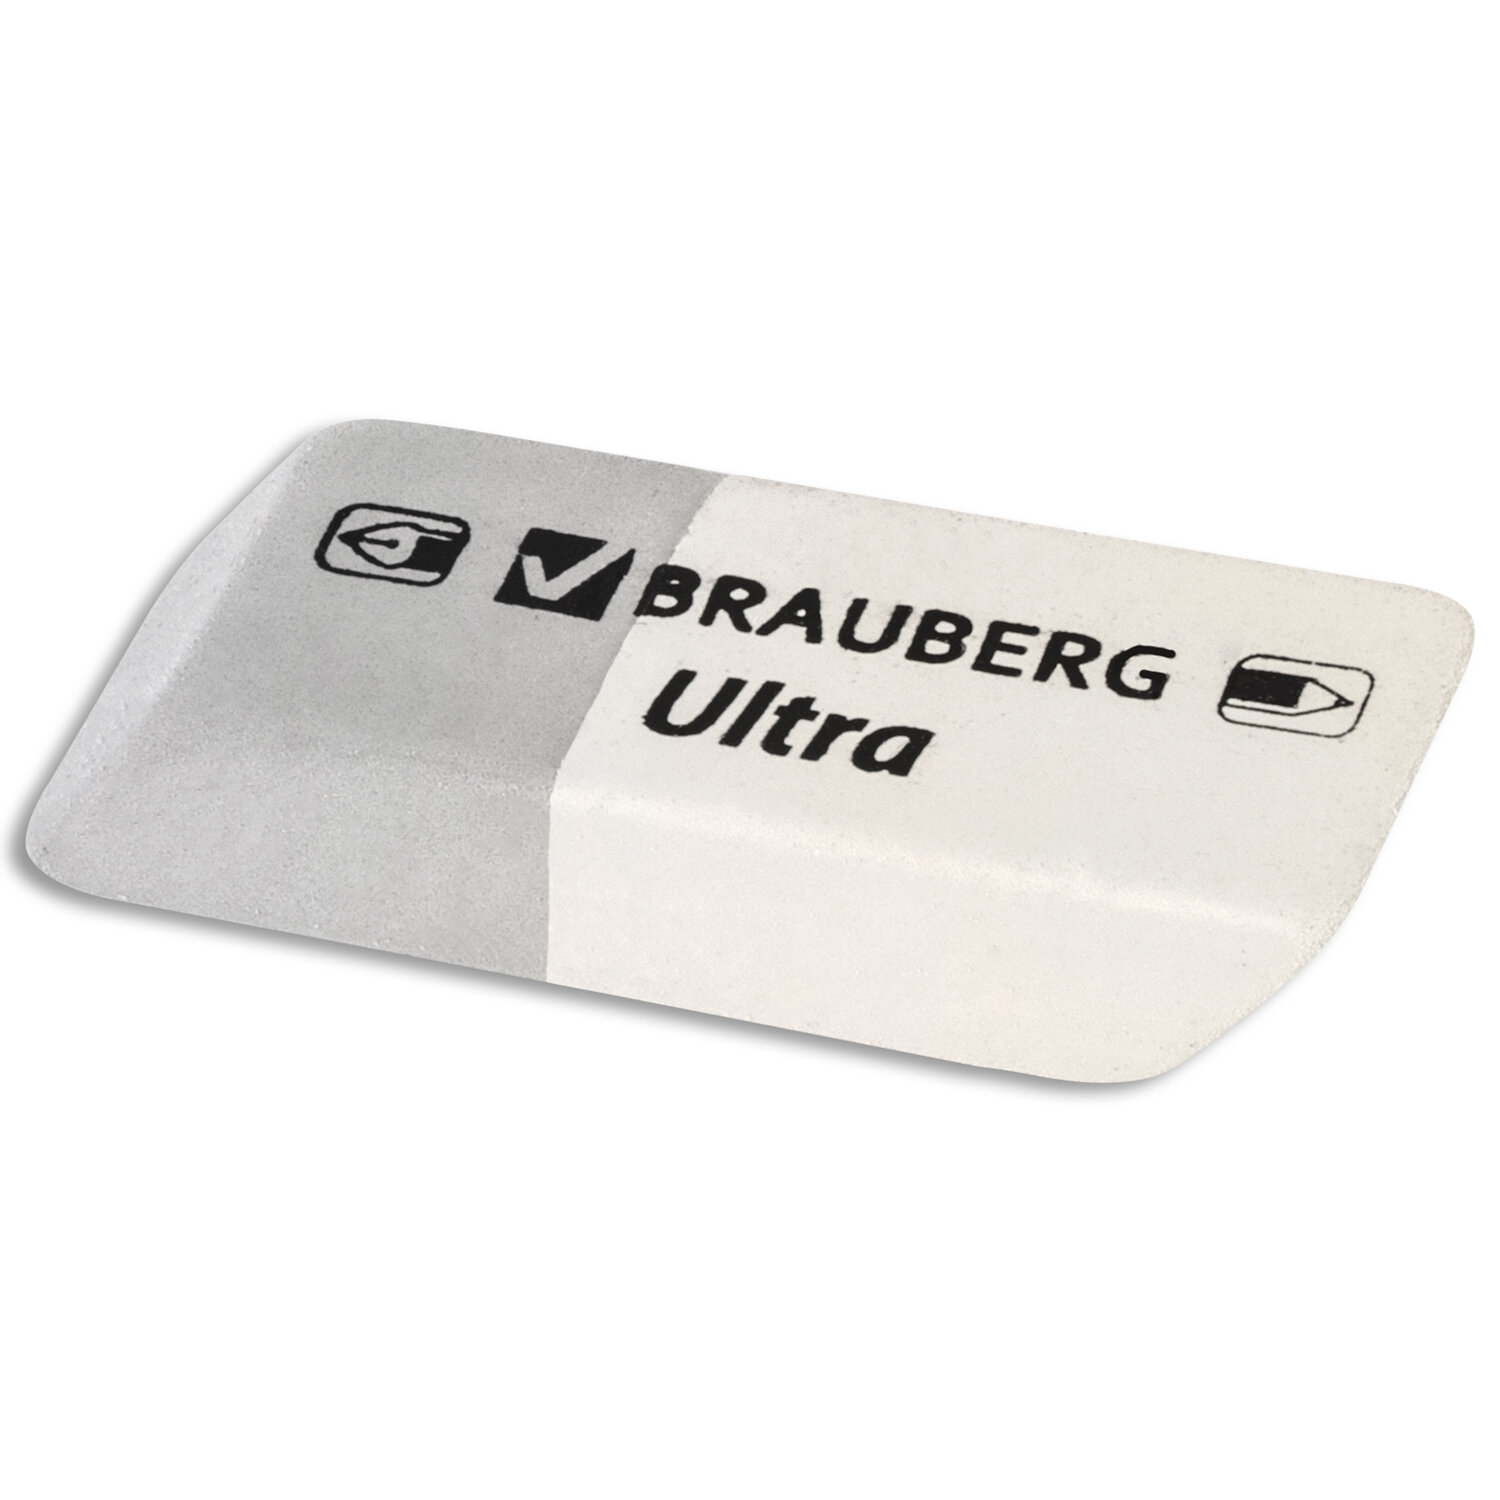  BRAUBERG Ultra